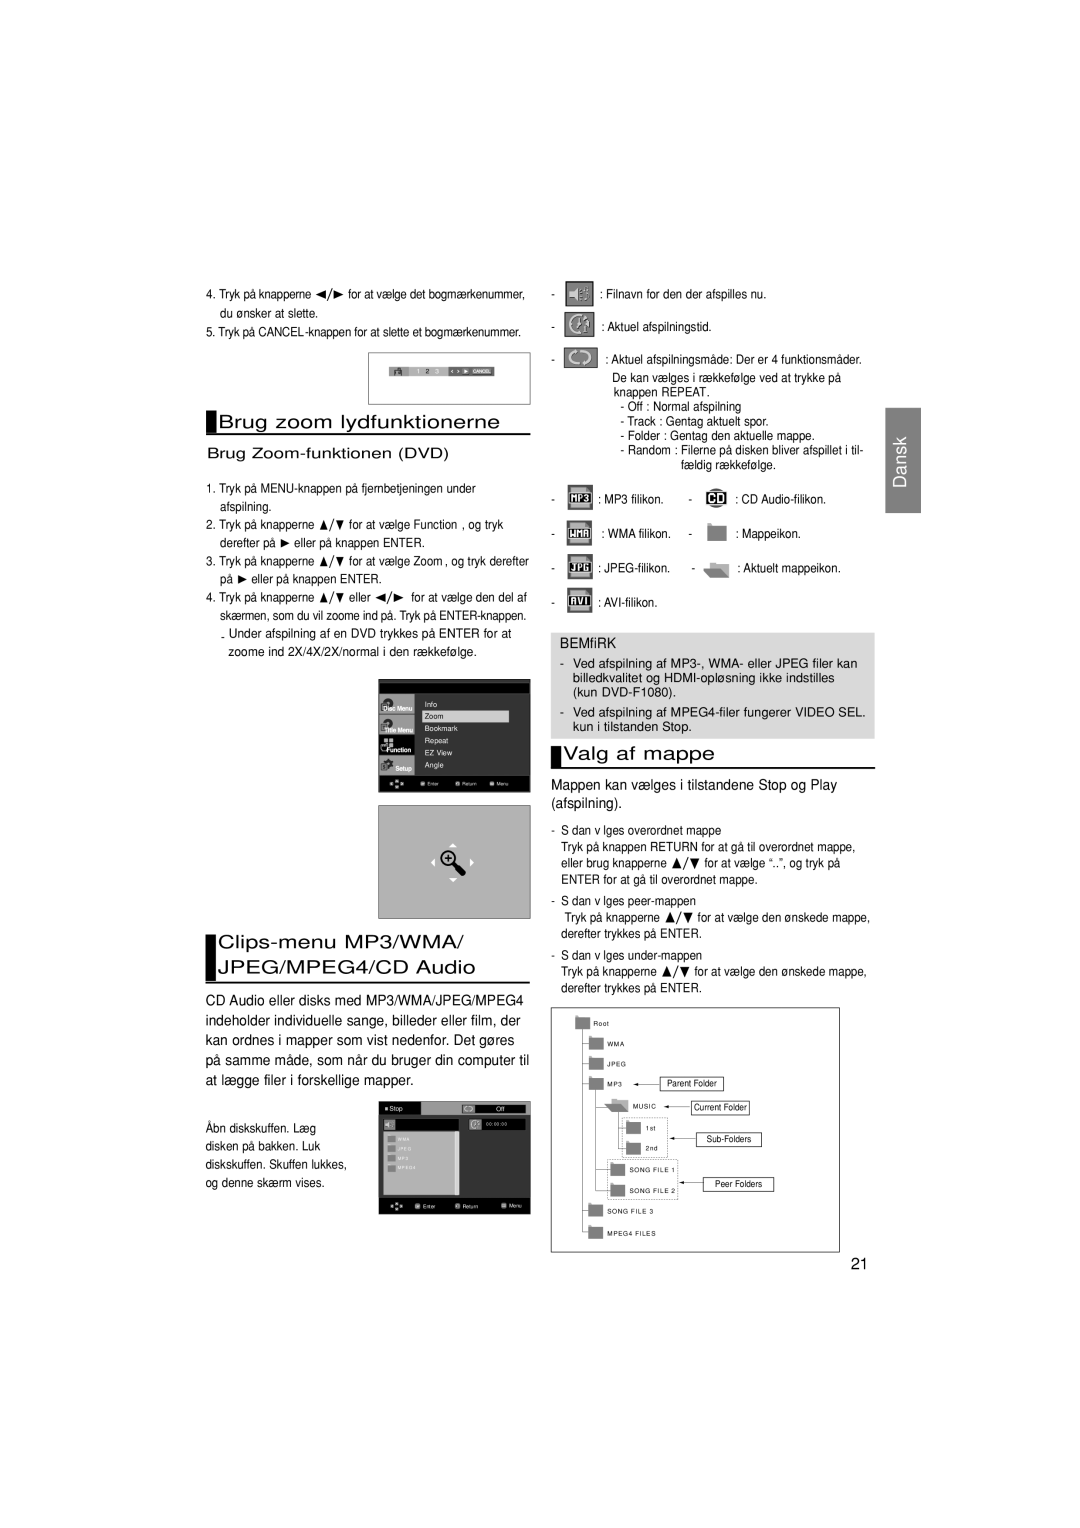 Samsung DVD-F1080W/XEE, DVD-F1080/XEE Brug zoom lydfunktionerne, Clips-menu MP3/WMA/ JPEG/MPEG4/CD Audio, Valg af mappe 